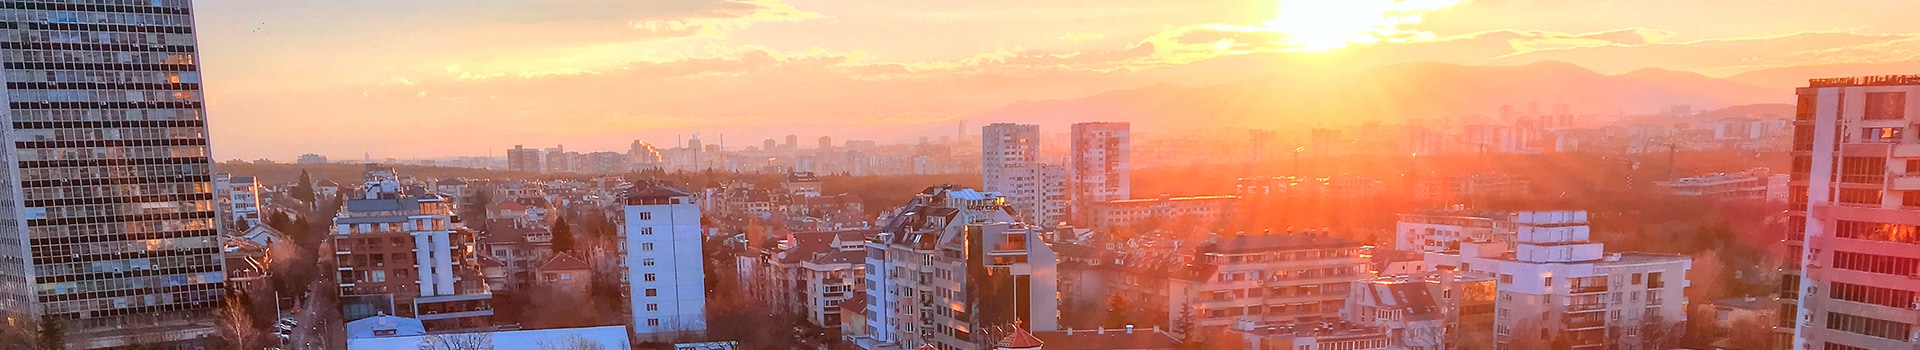 Belgrad - Sofia